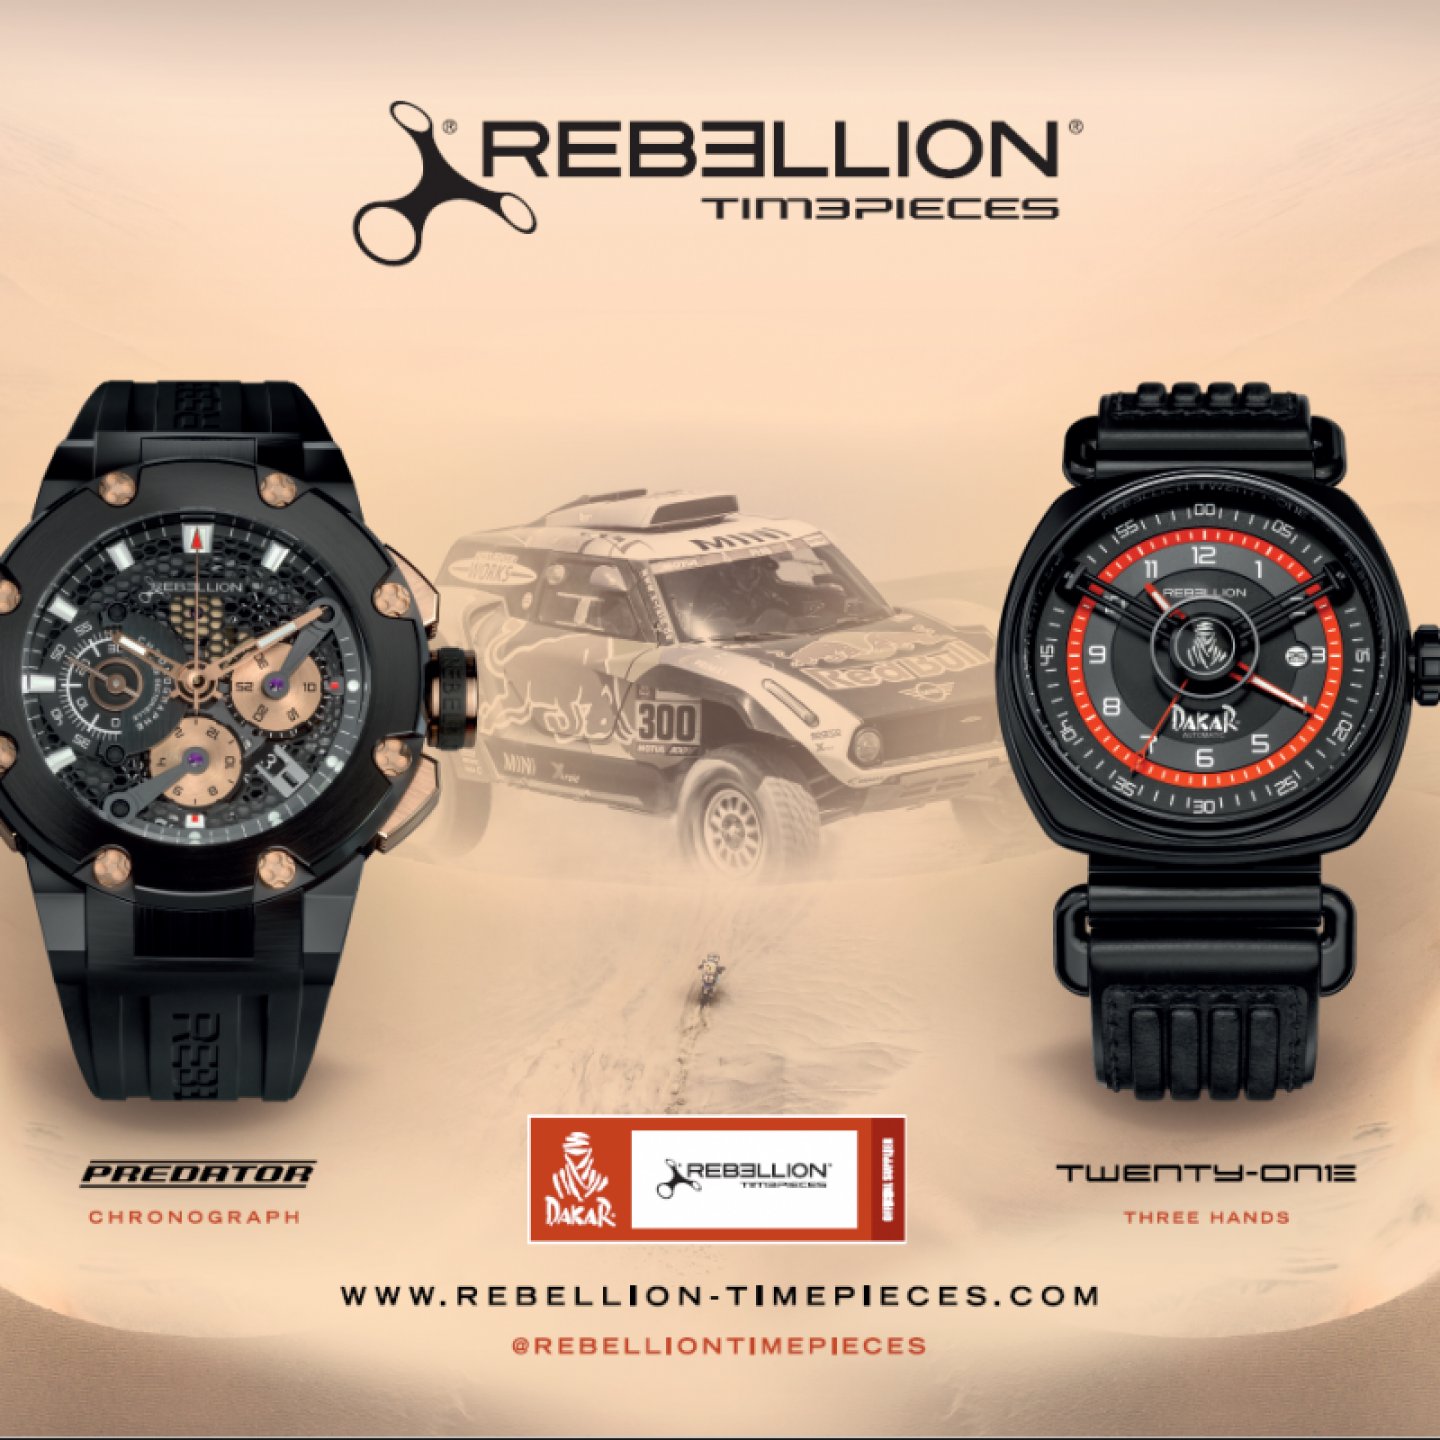 REBELLION（レベリオン）ダカールラリーのオフィシャル・タイムキーパーとして、初の中東開催の第42回大会にあわせた20本限定の特別モデルを発表